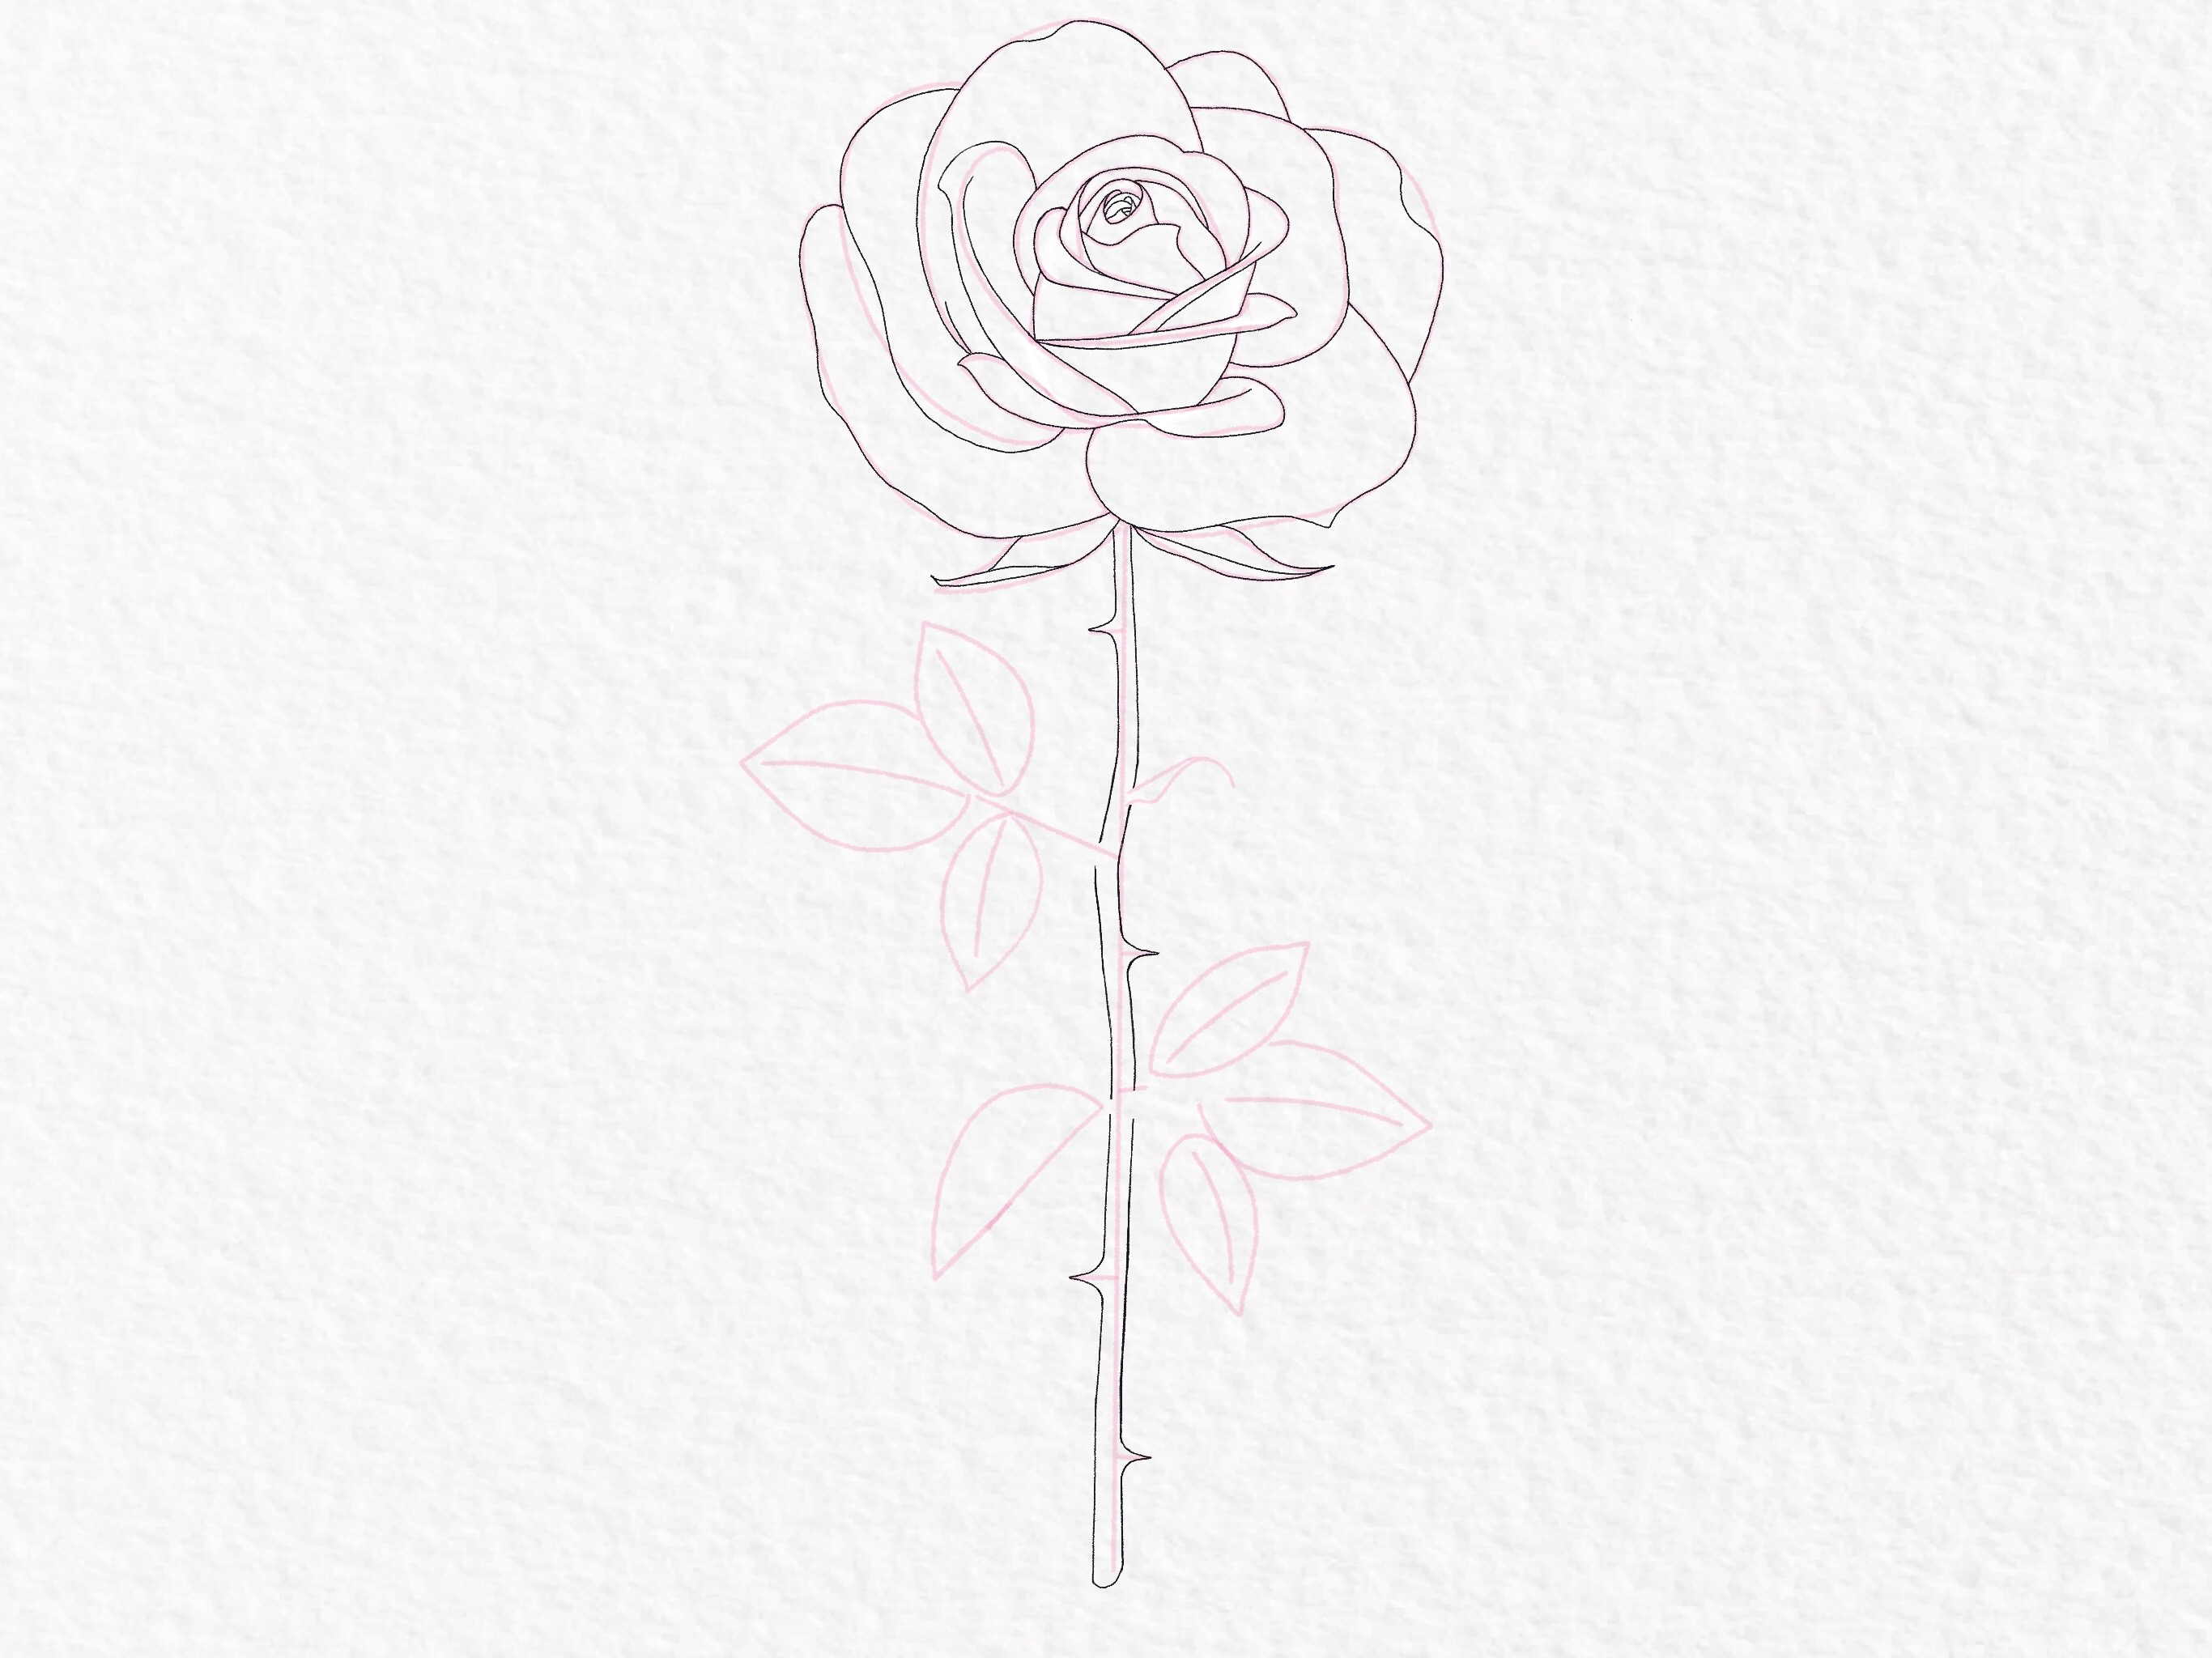 How to Draw a Rose Easy (Rose) Step by Step | DrawingTutorials101.com